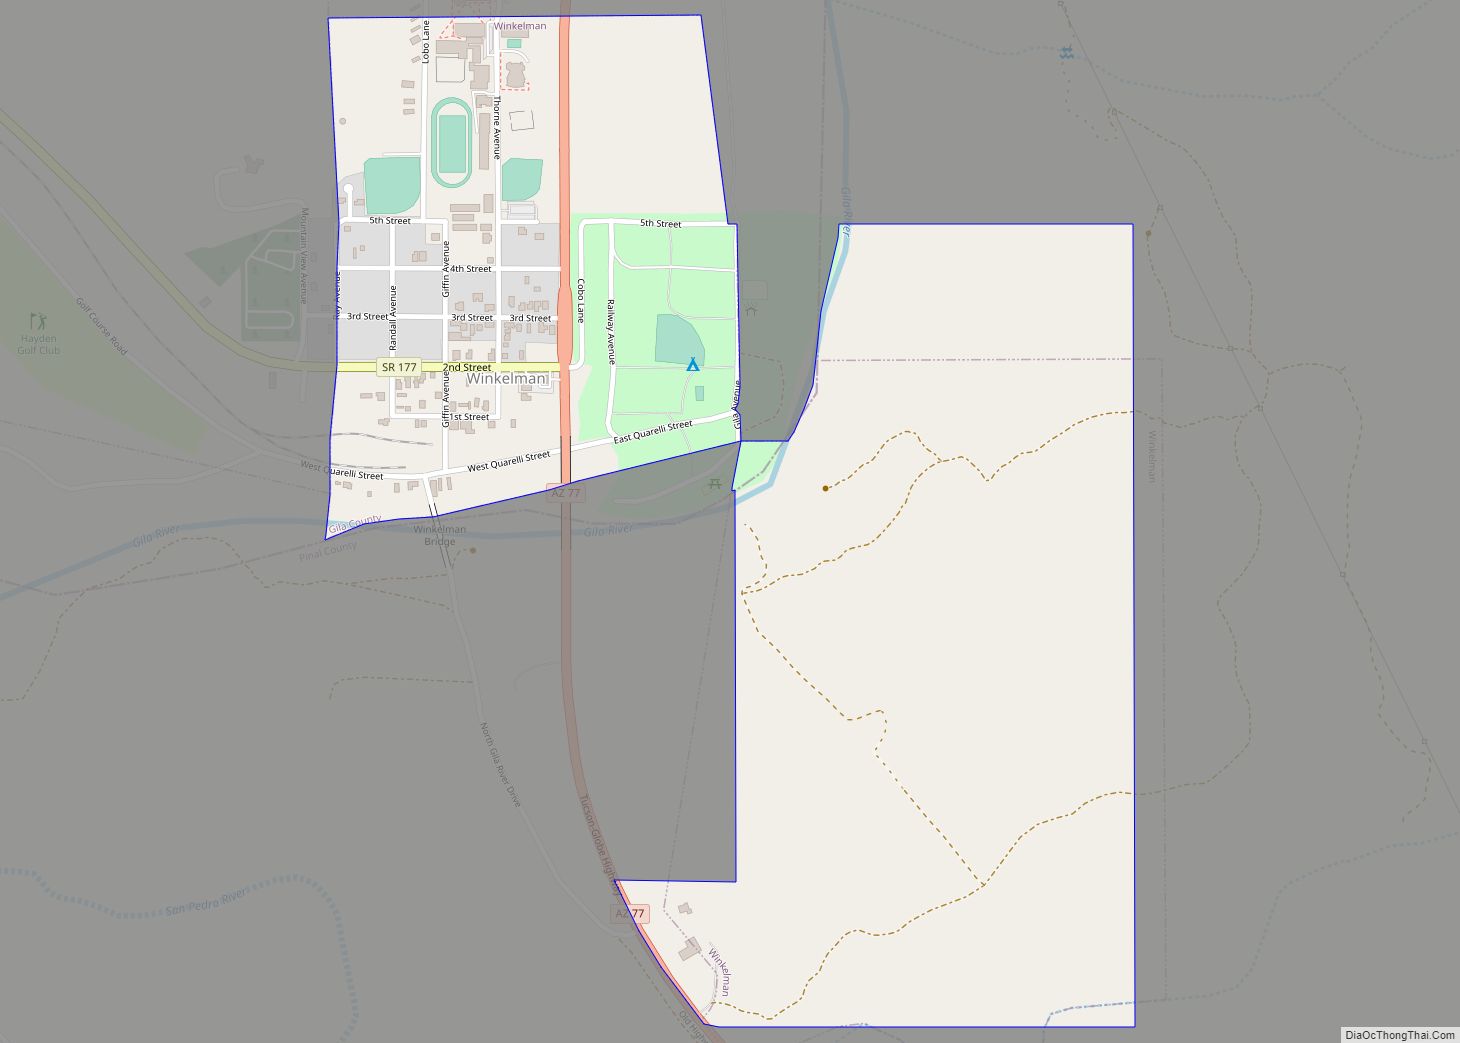 Map of Winkelman town